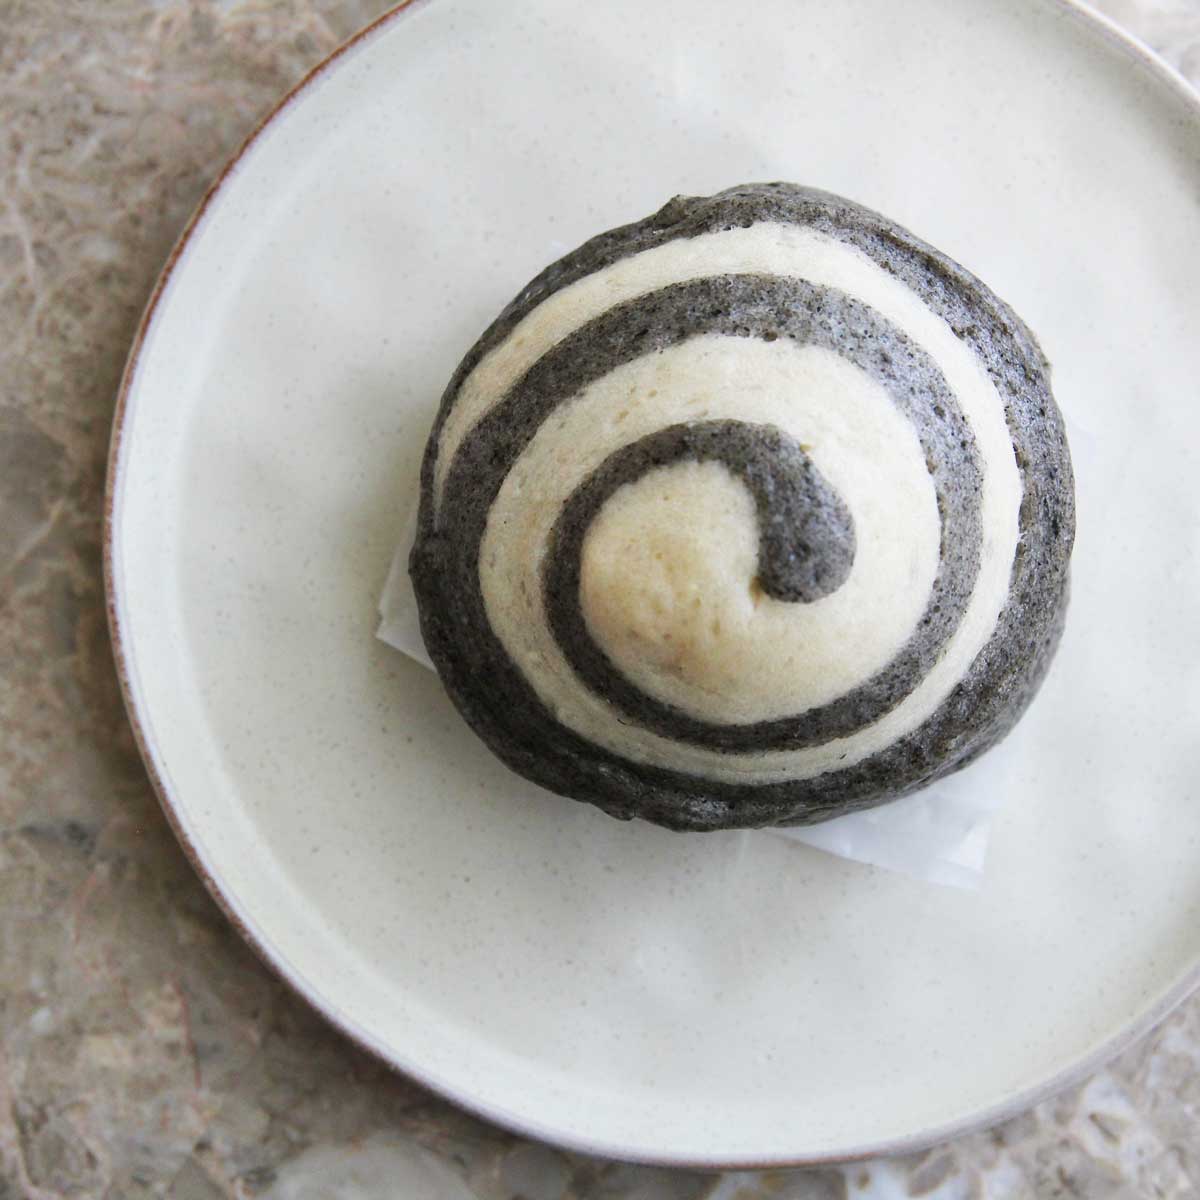 Homemade Black Sesame & Almond Milk Spiral Mantou (Vegan Steamed Buns Recipe) - Red Bean Mochi Cake